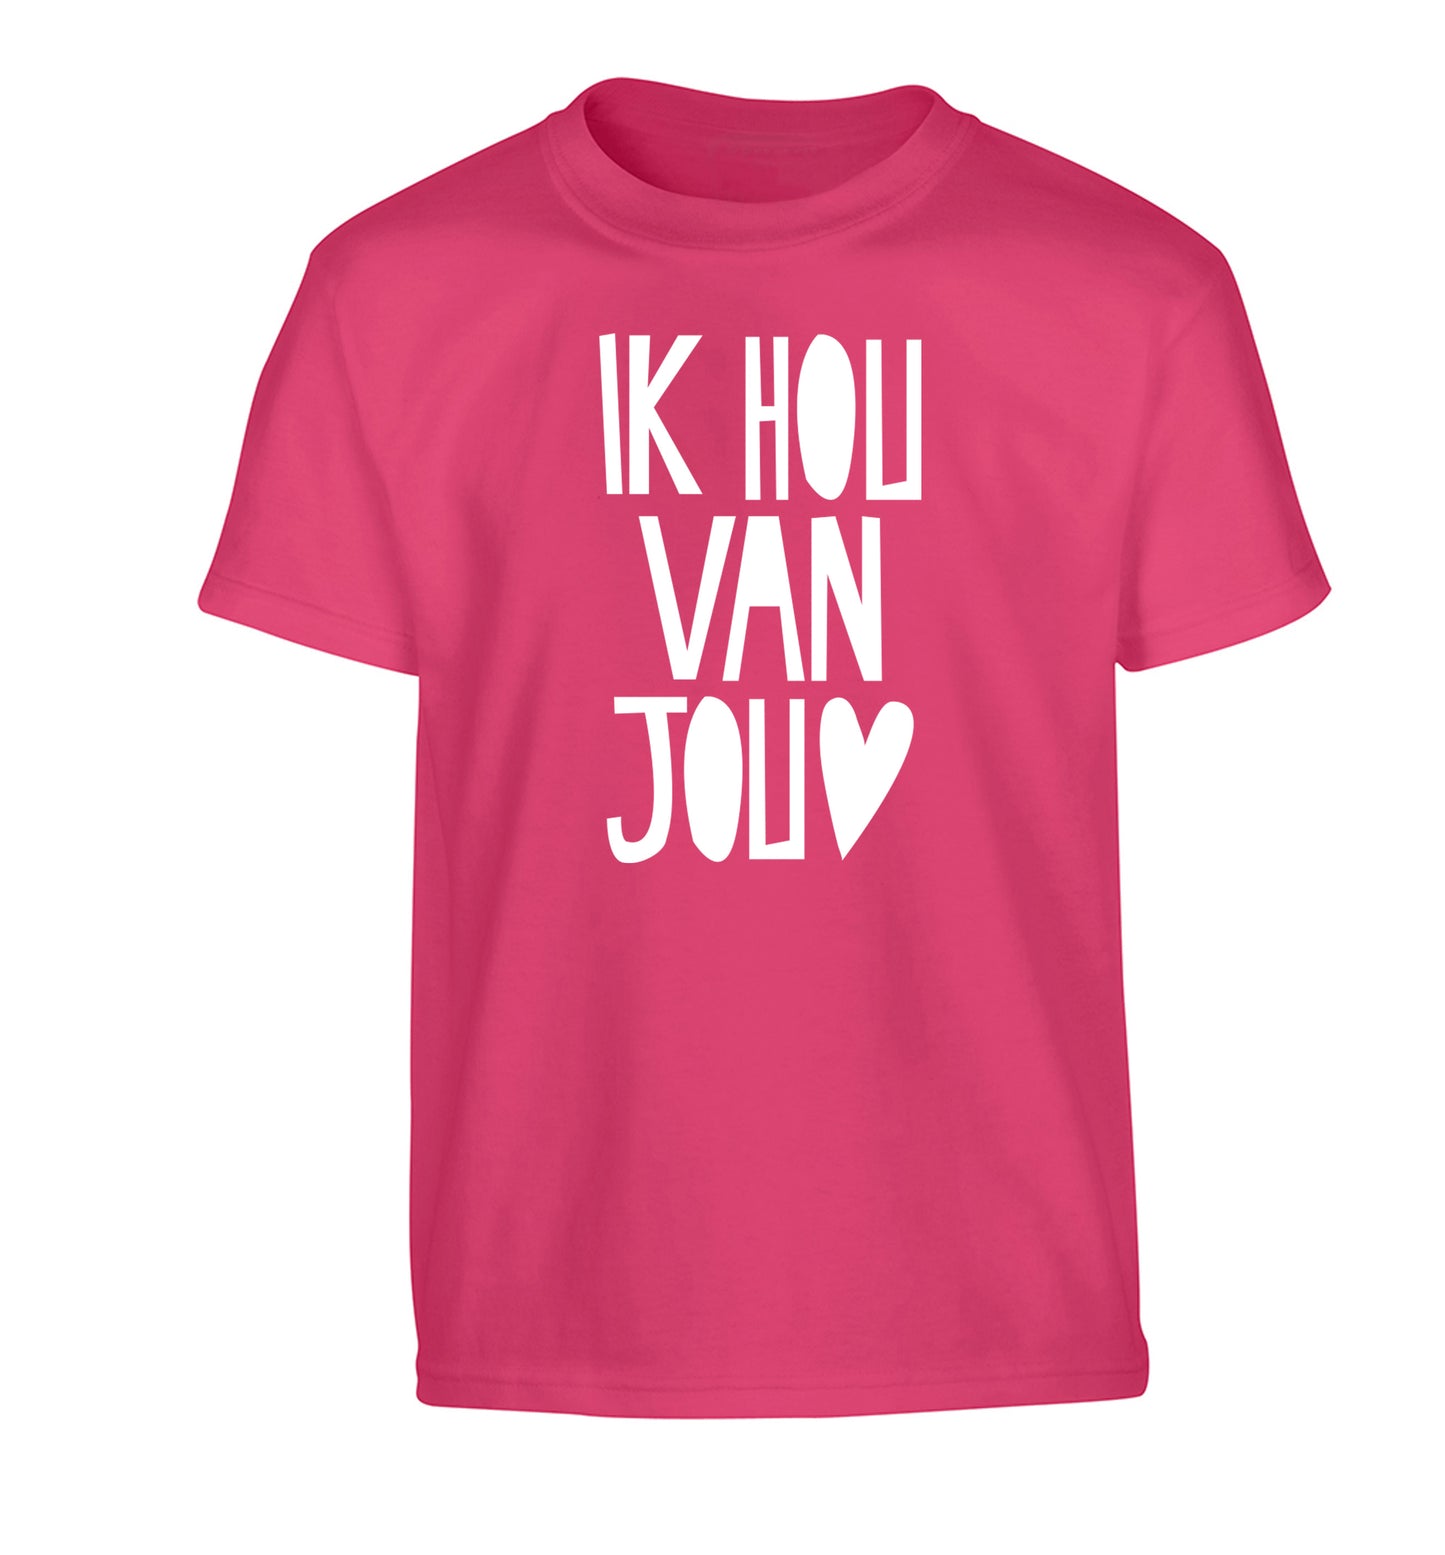 Ik Hau Van Jou - I love you Children's pink Tshirt 12-13 Years